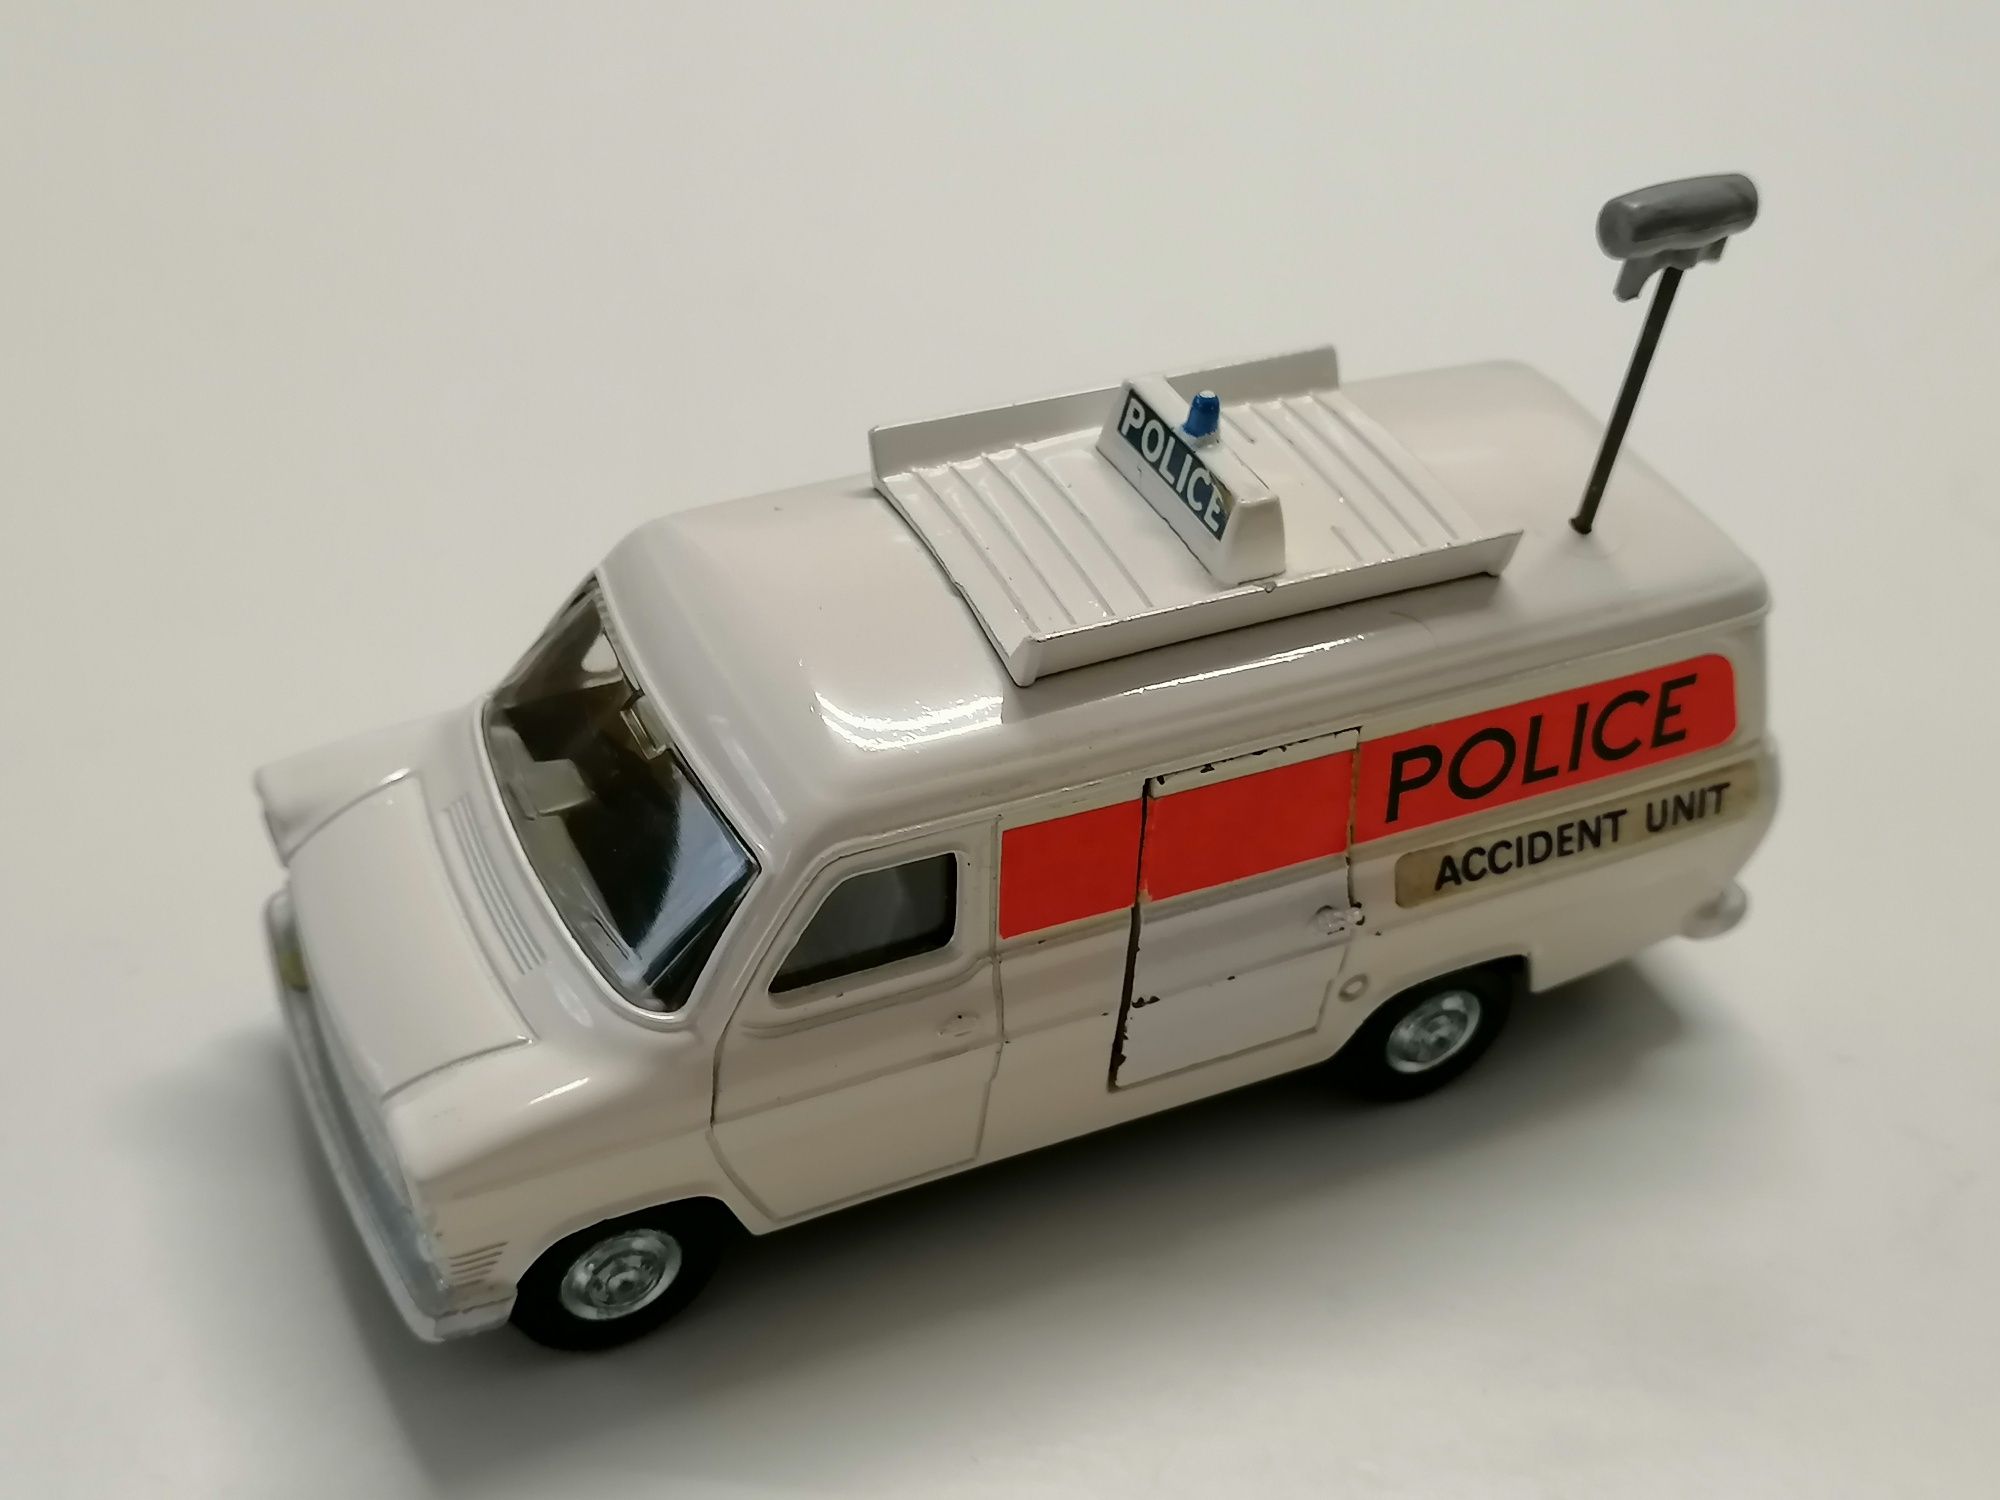 Dinky Toys Ford Transit Van